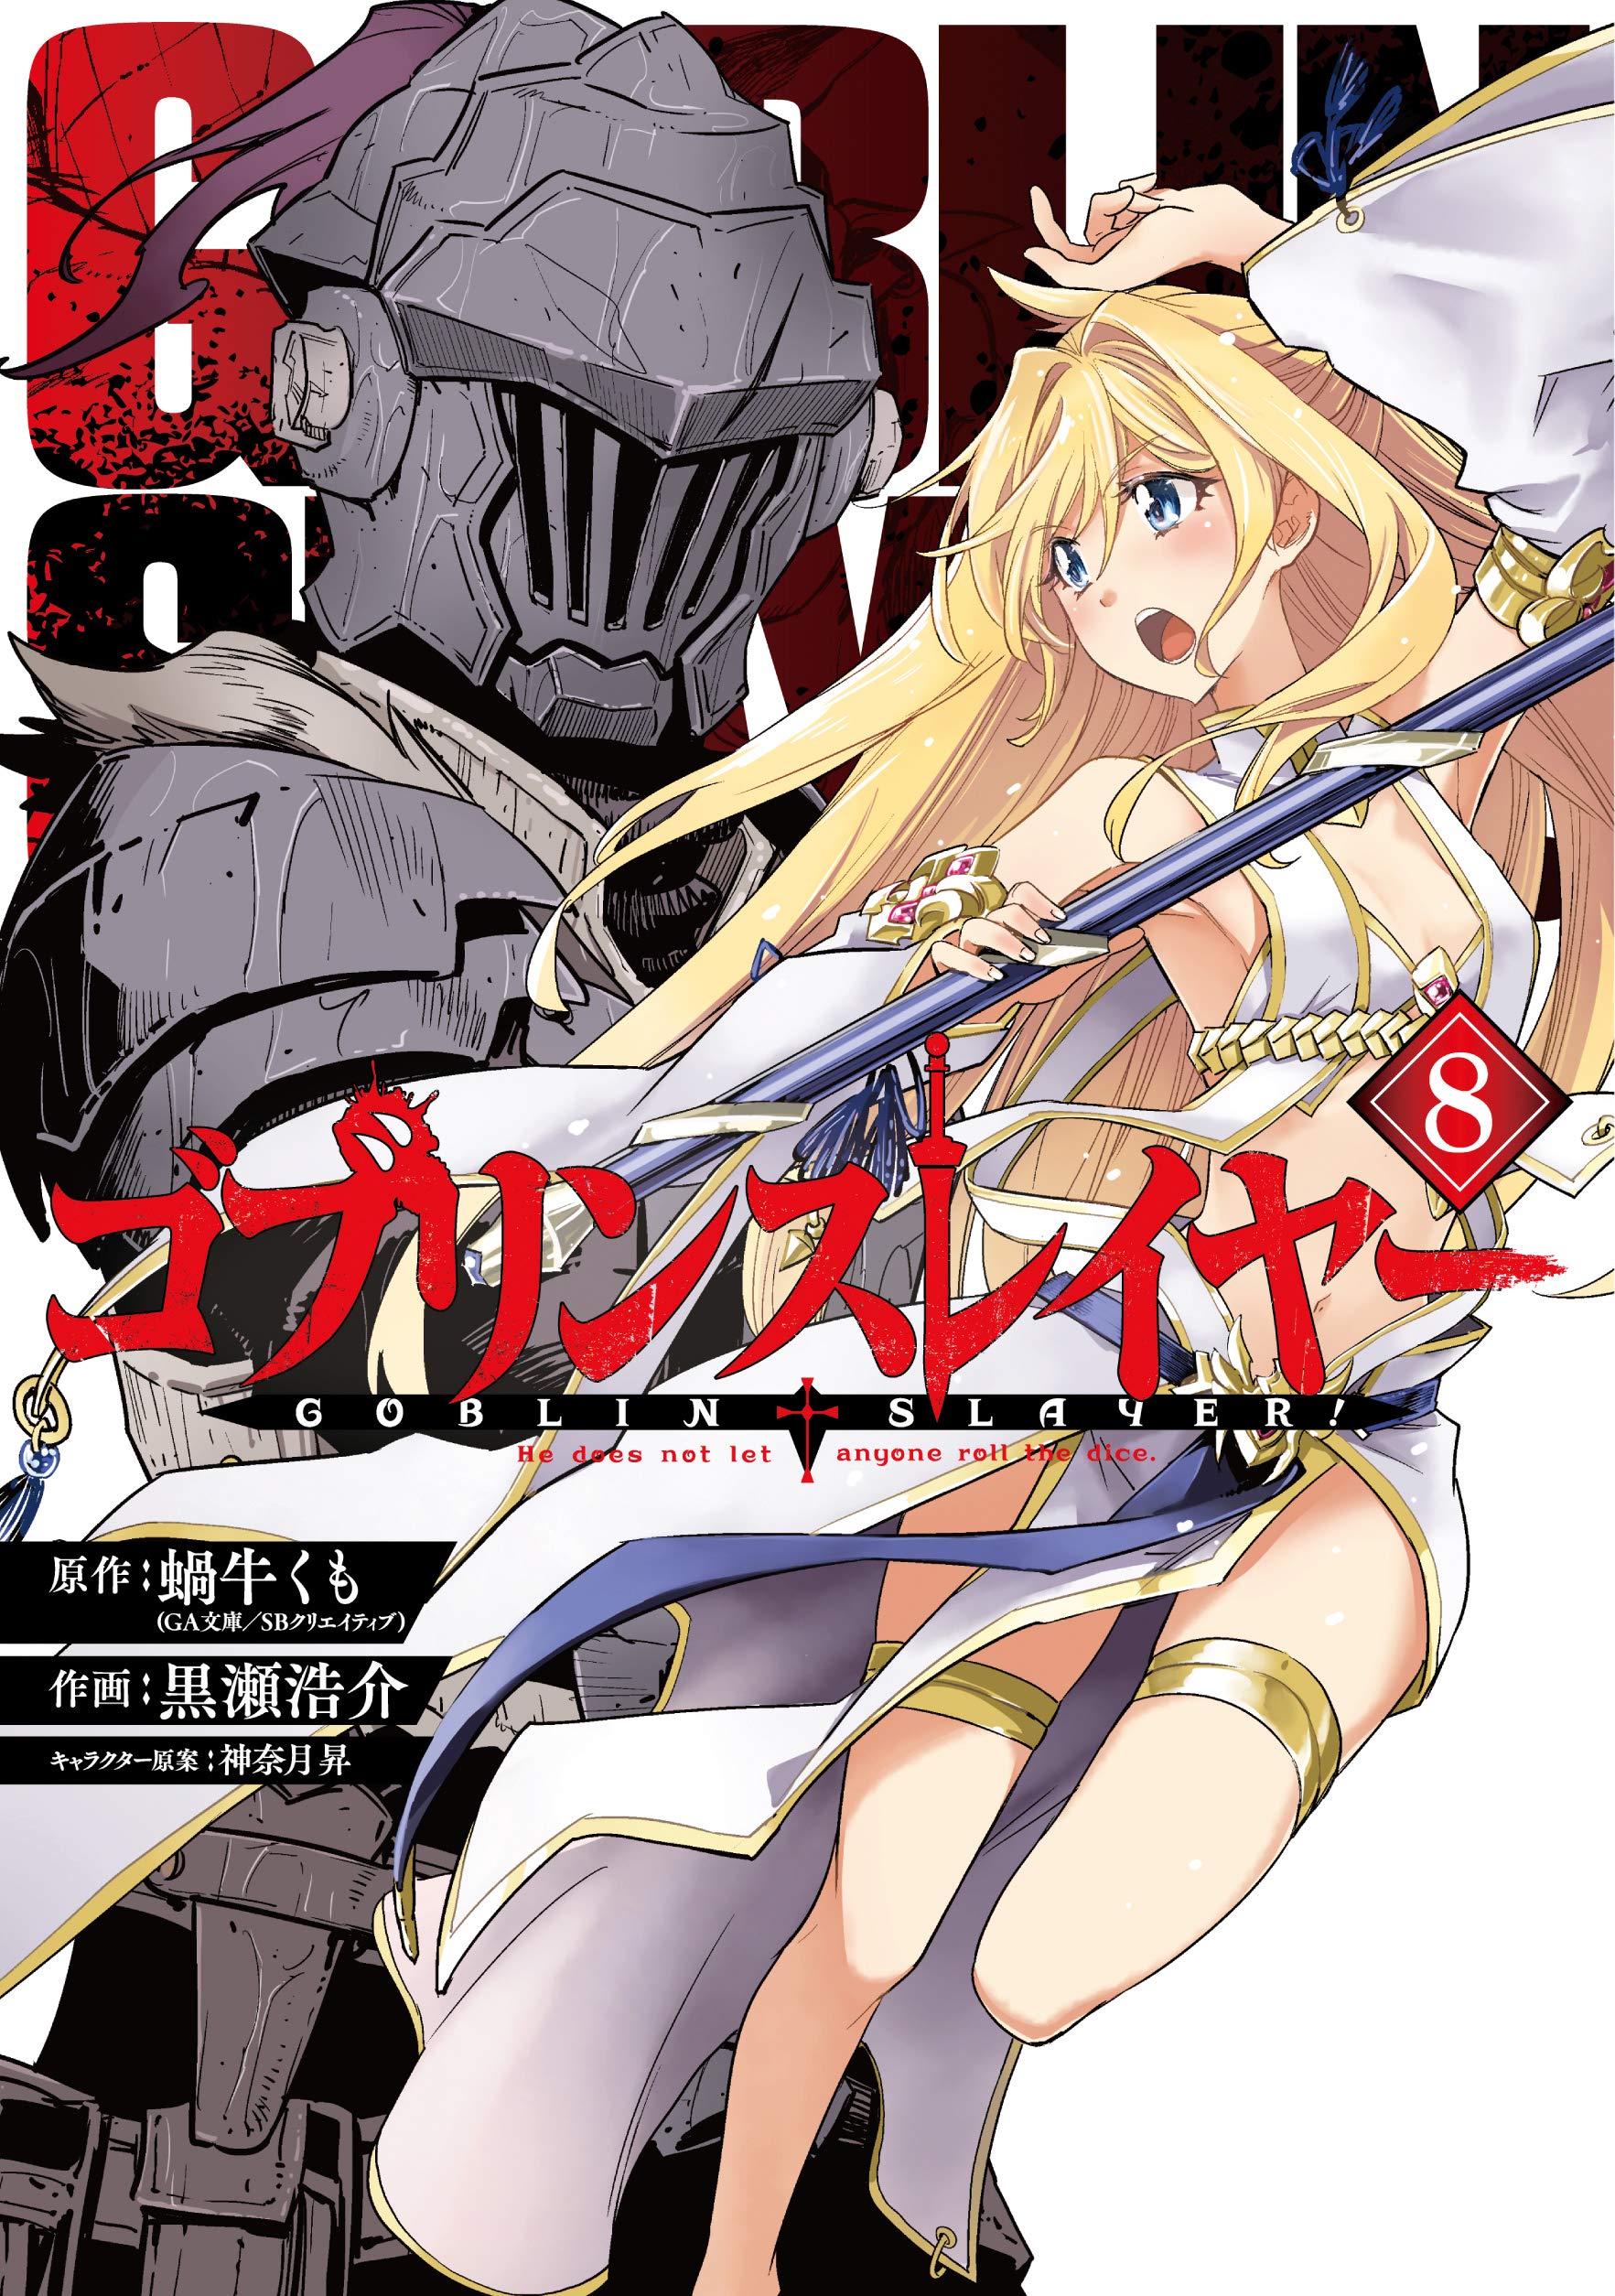 Manga Volume 8 | Goblin Slayer Wiki | Fandom